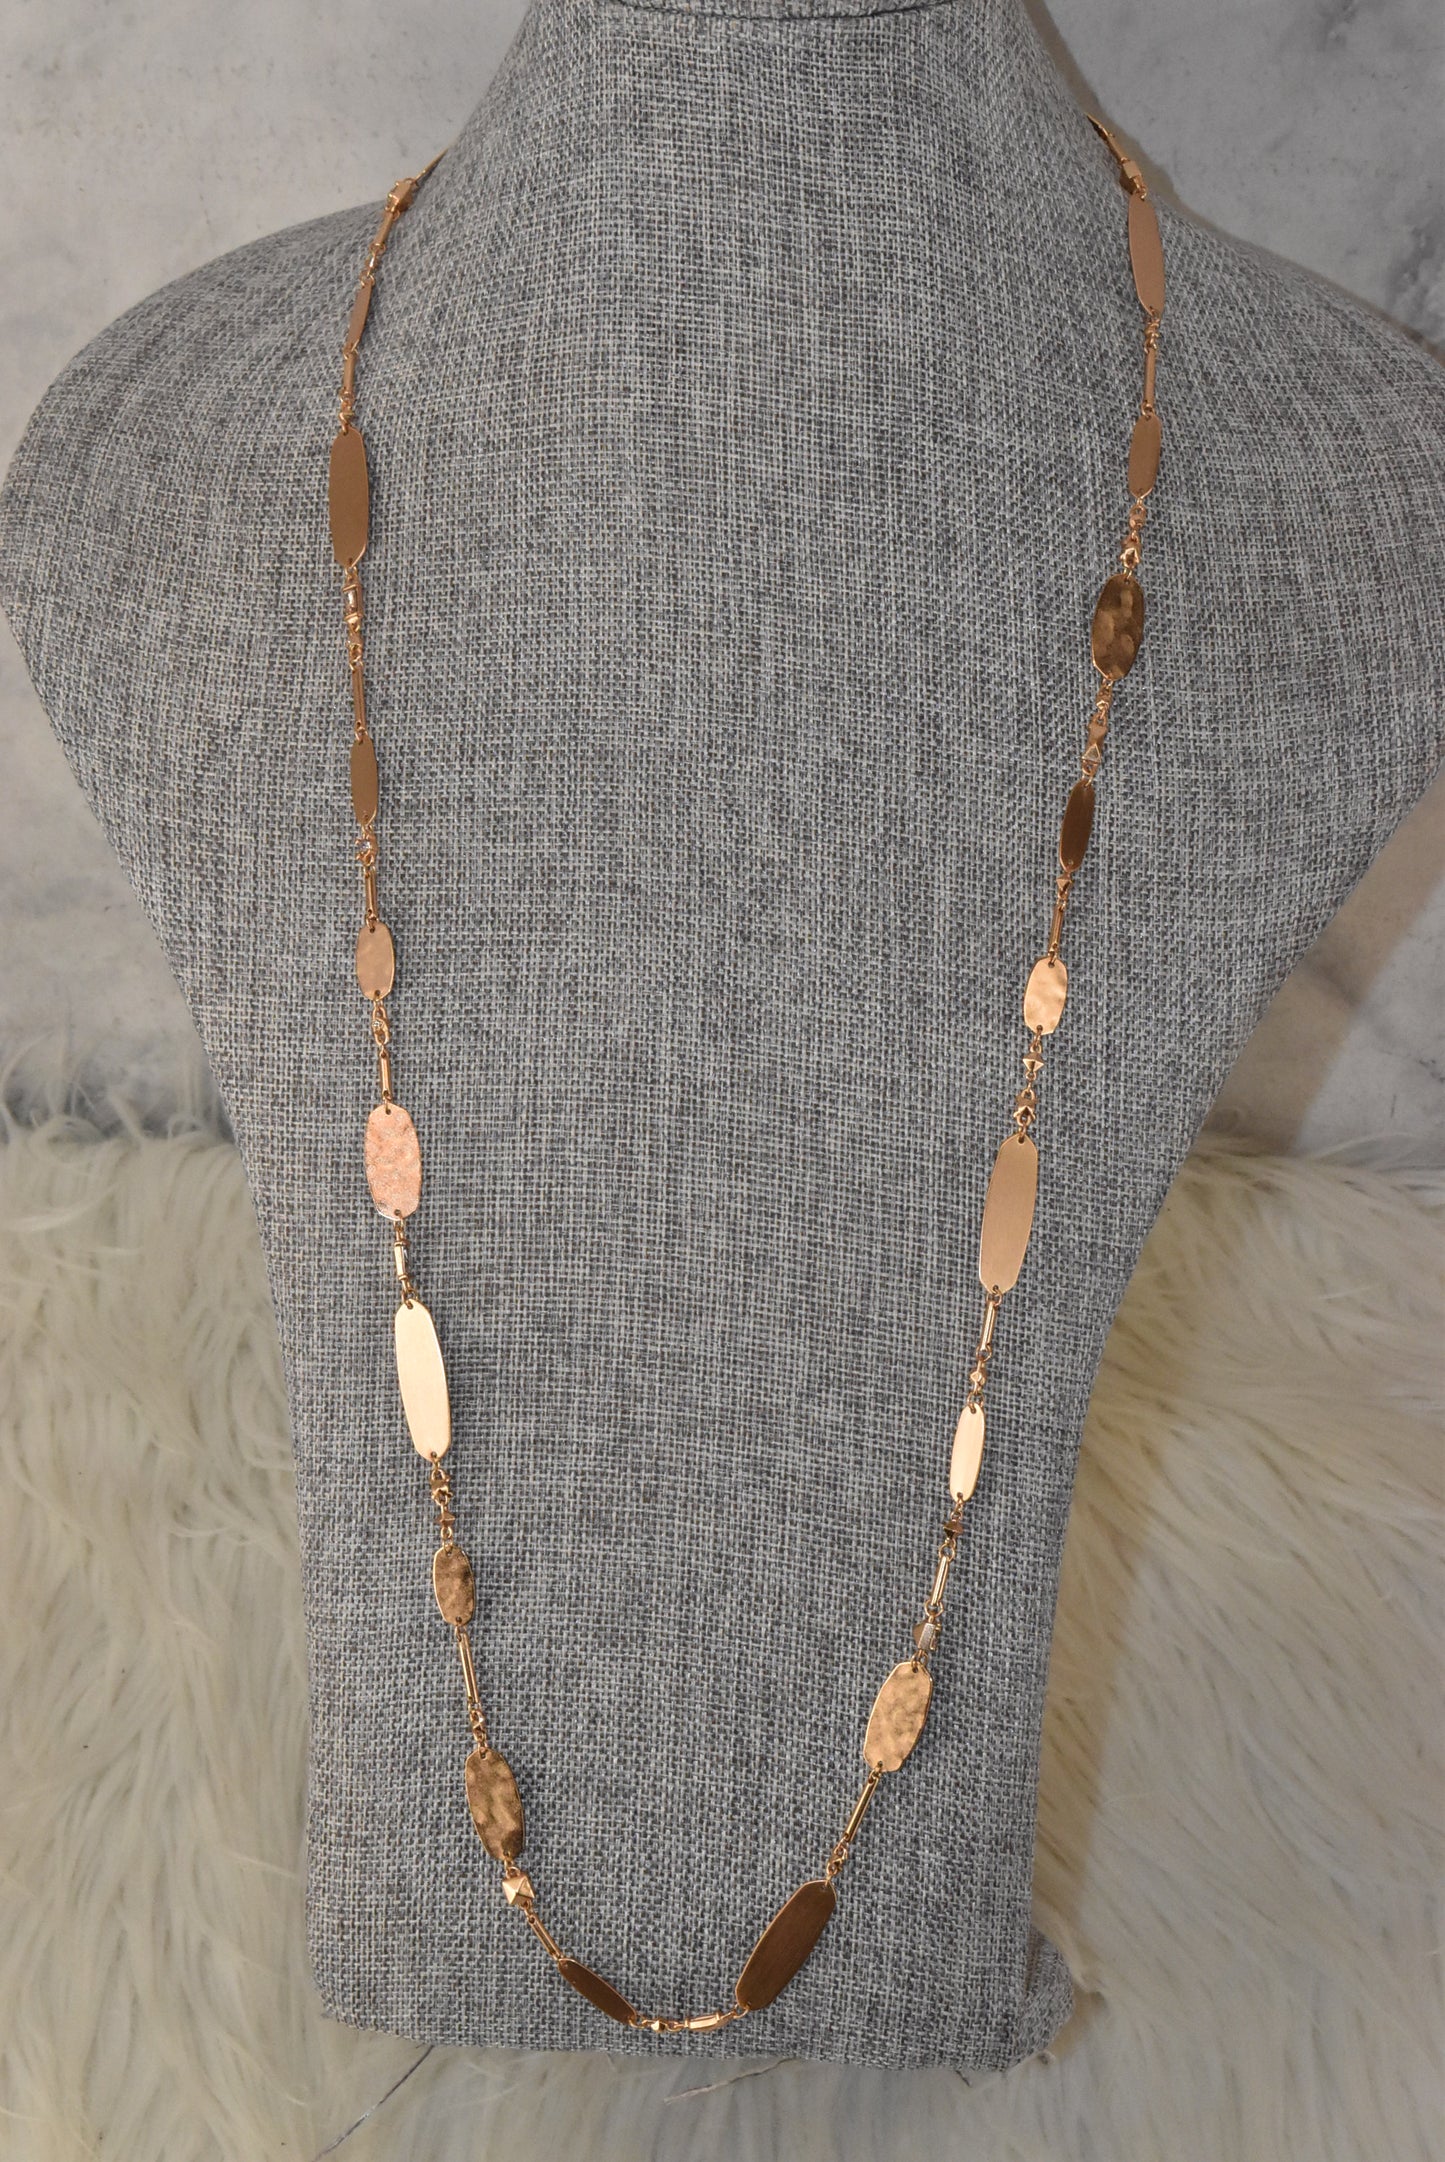 Necklace Designer By Kendra Scott